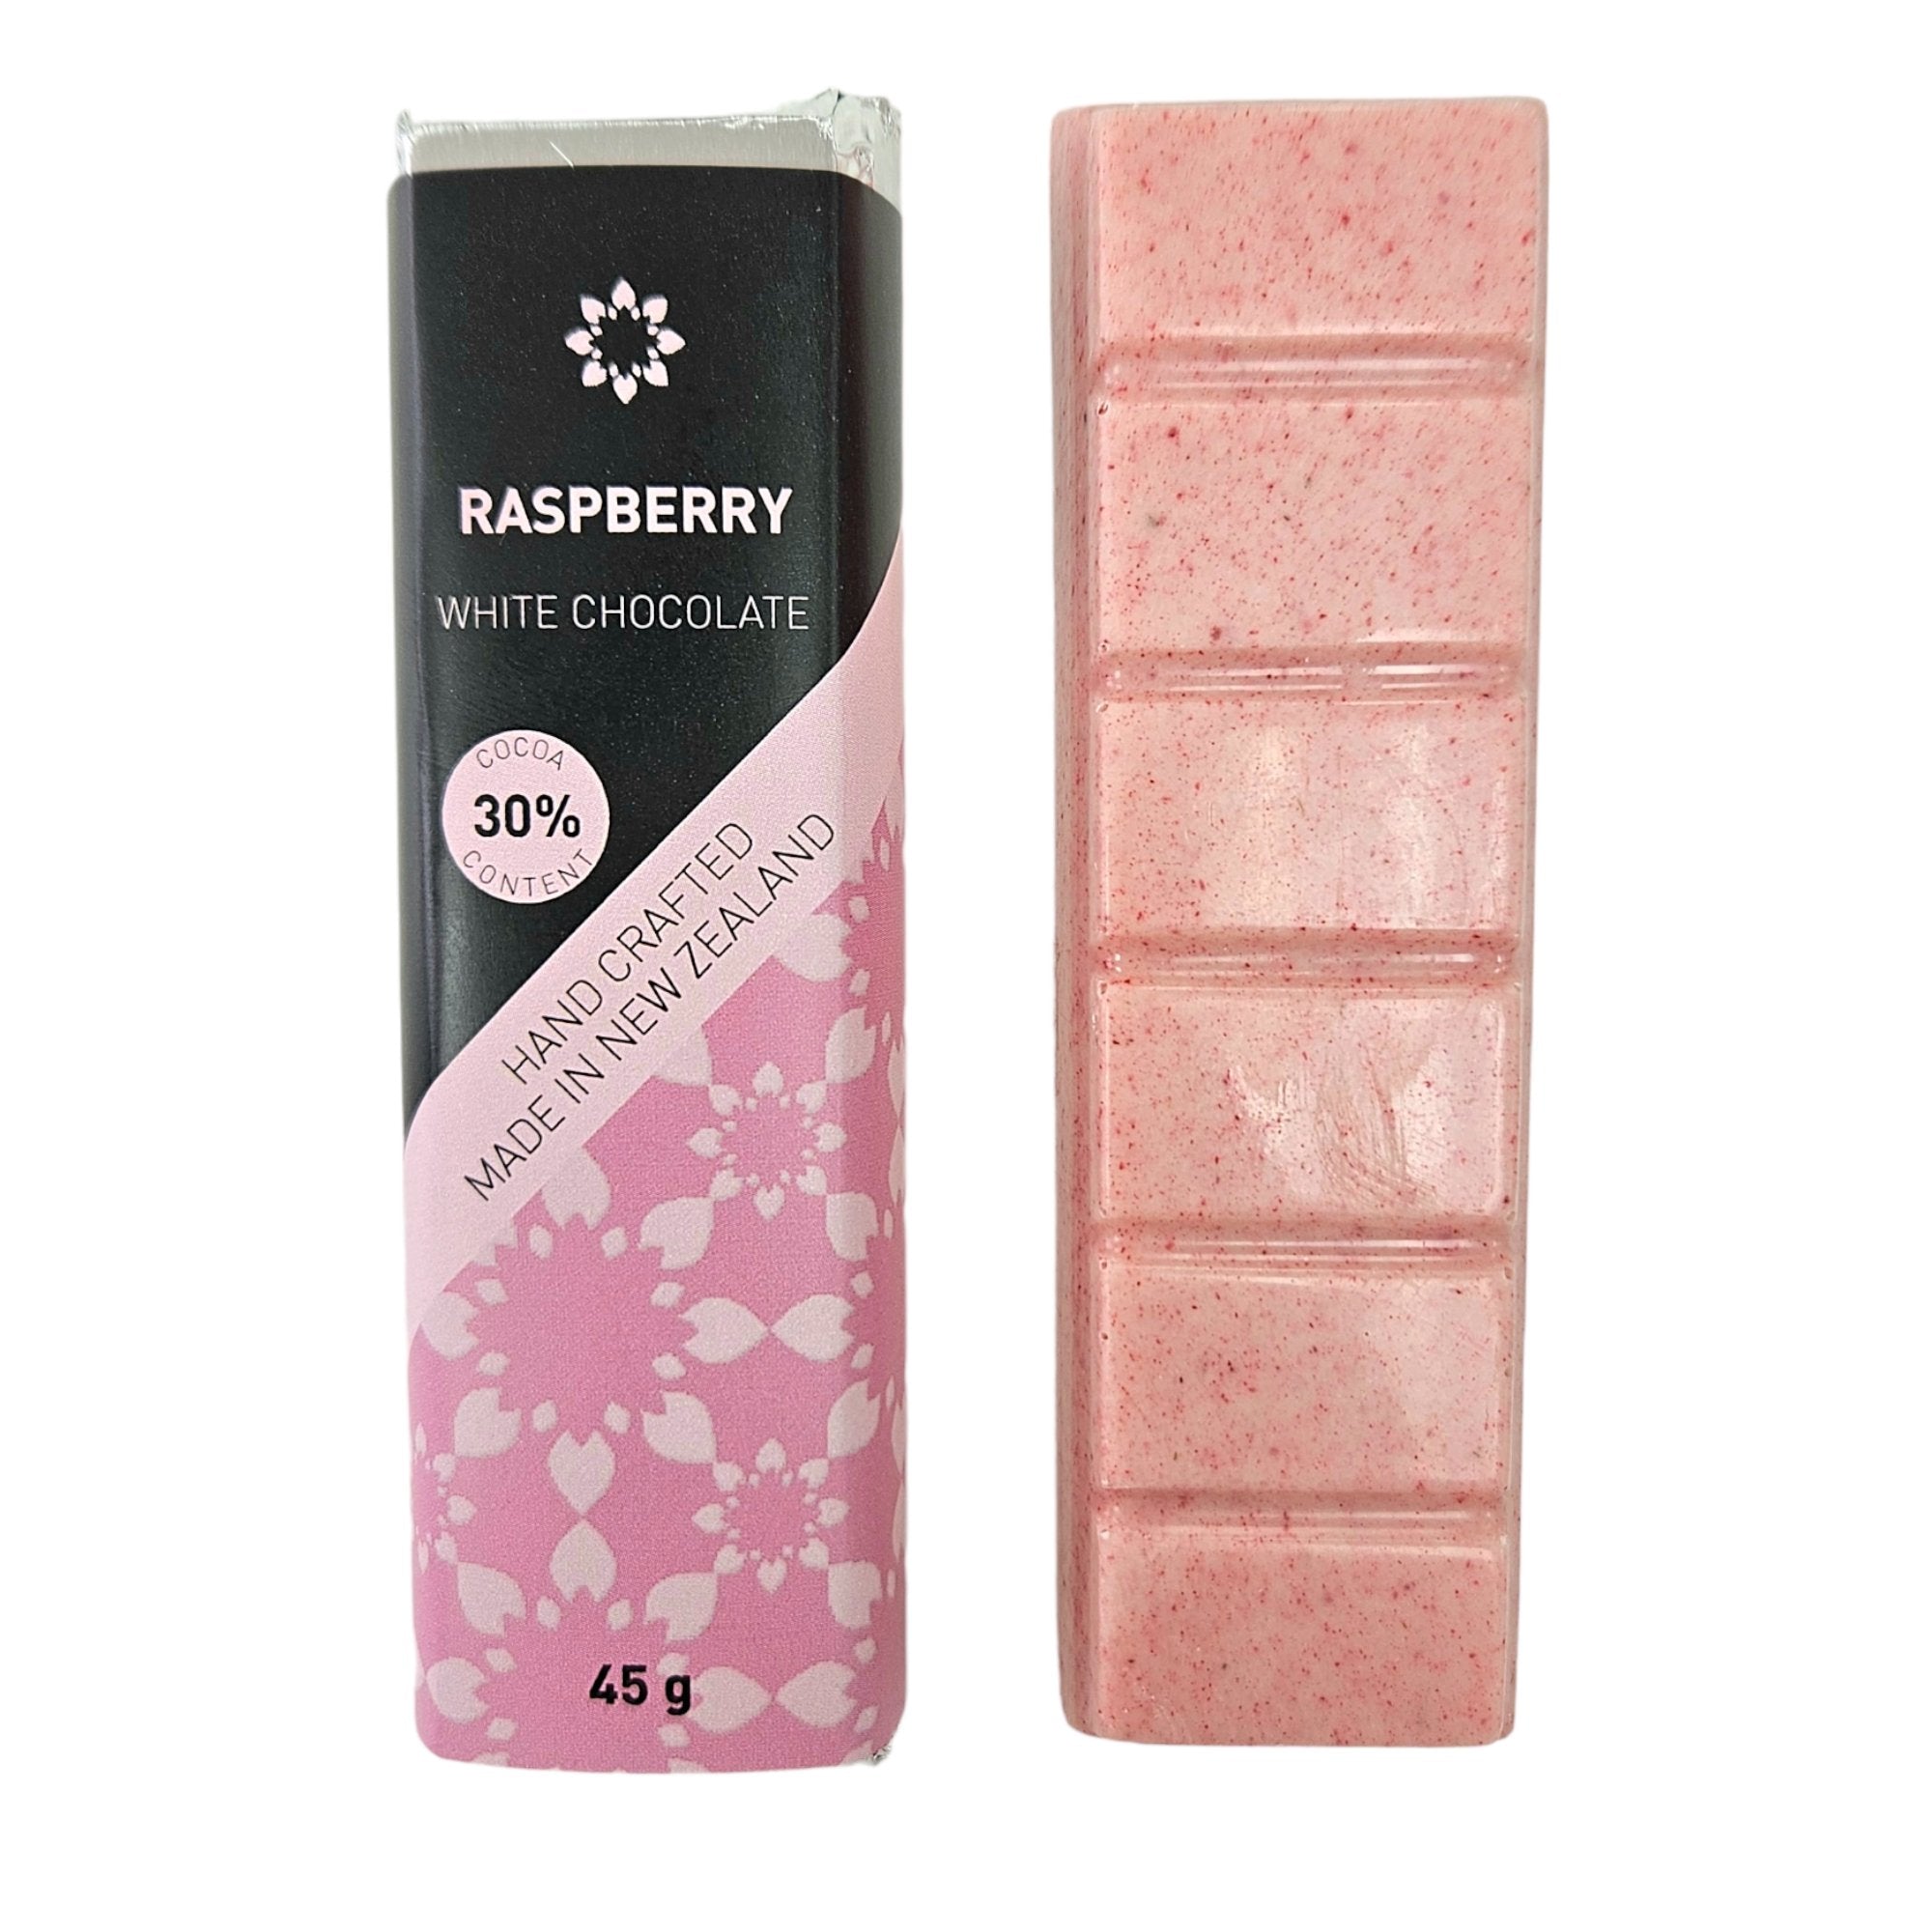 Raspberry white chocolate bar - Beautiful Gifts